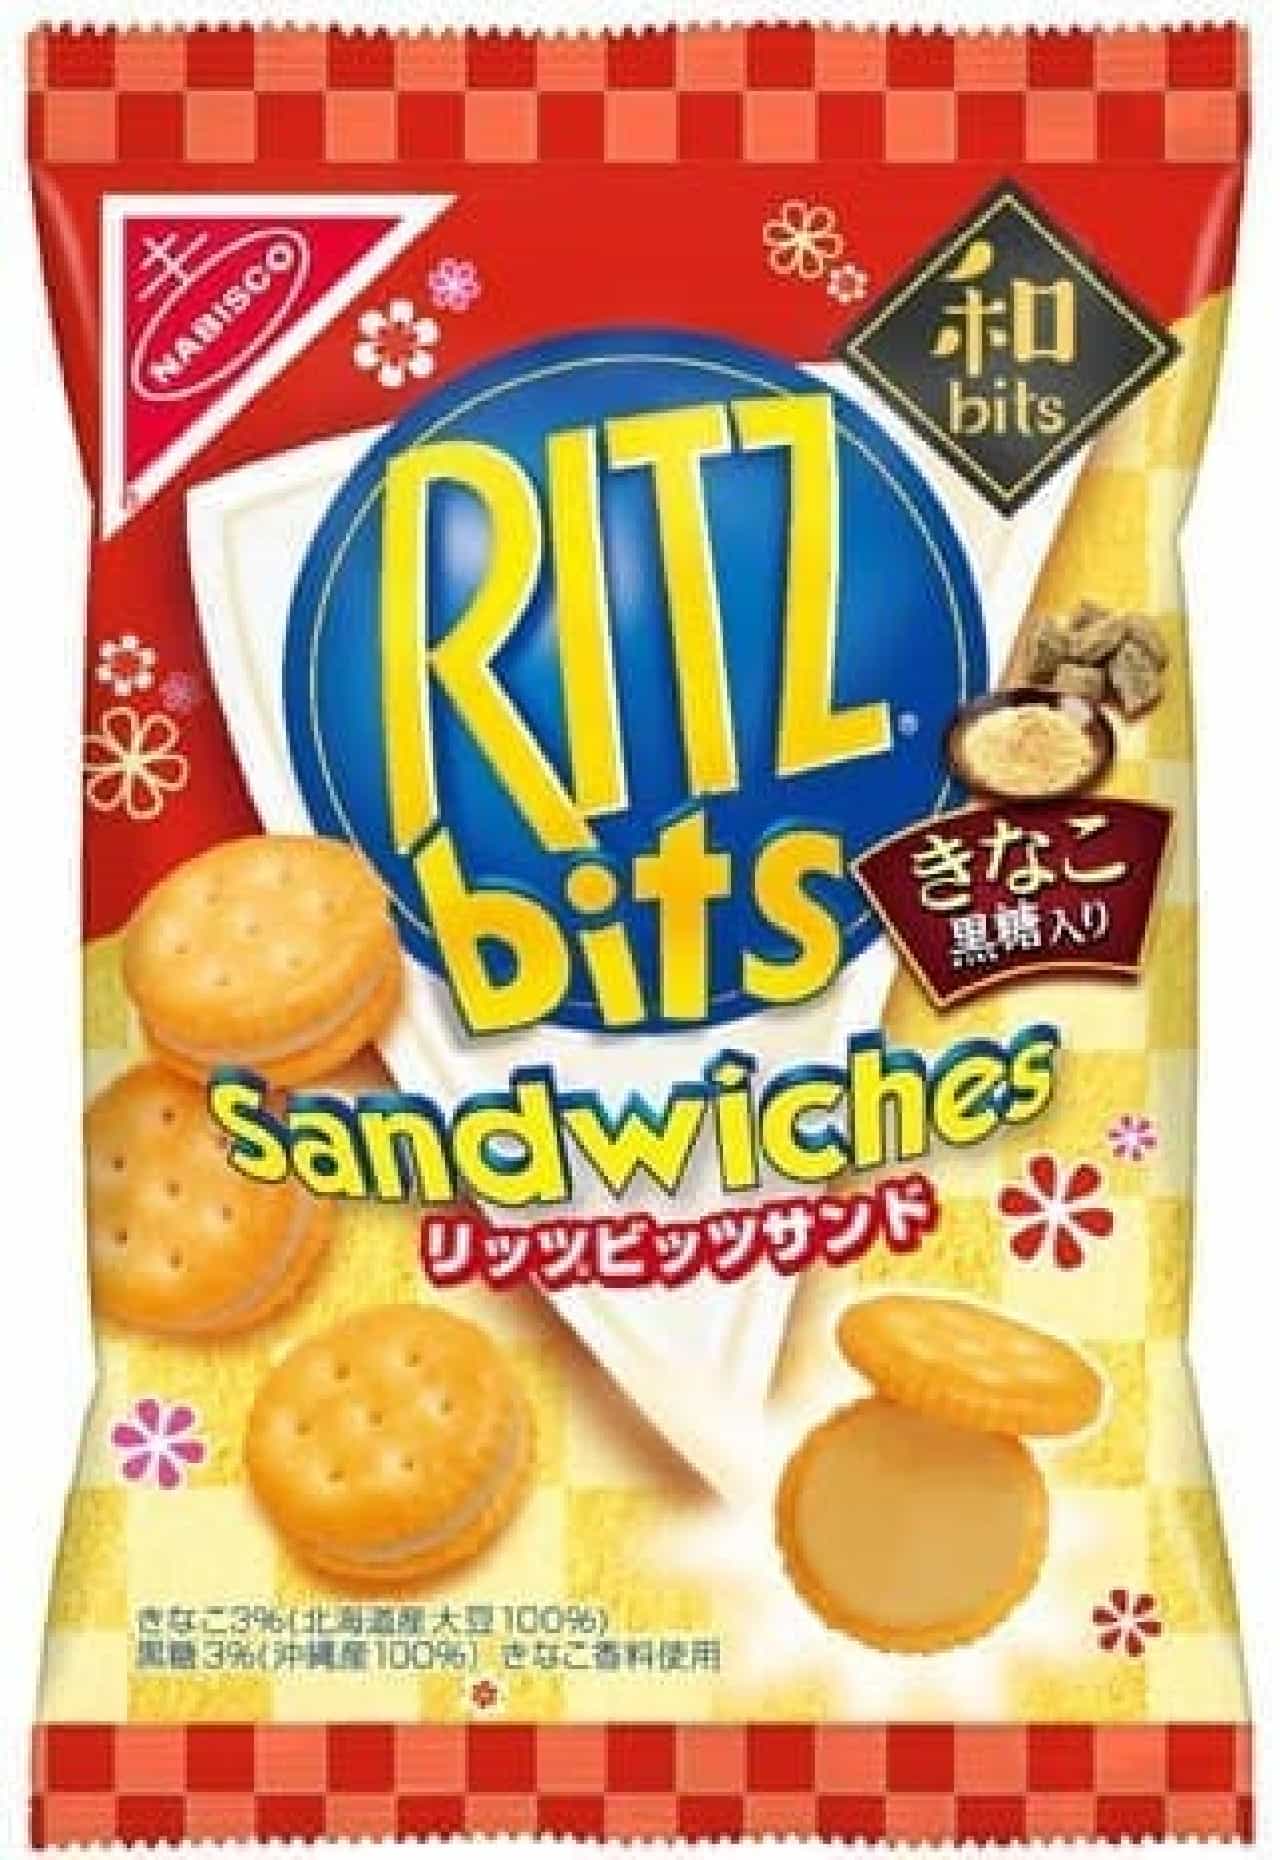 Japanese flavor to Ritz Bits Sandwich!